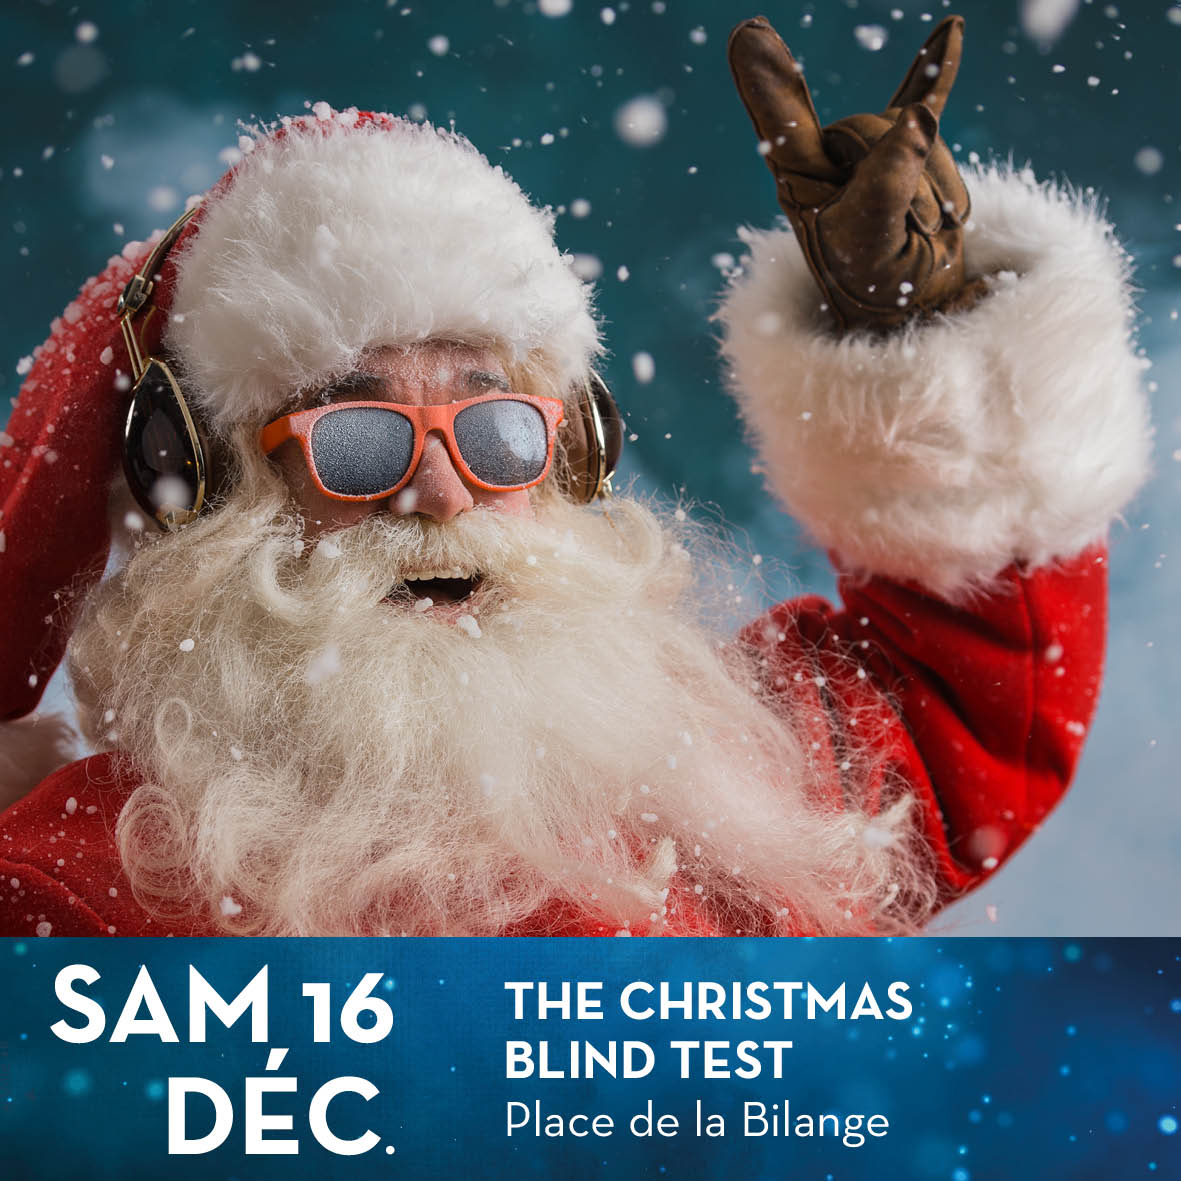 THE CHRISTMAS BLIND TEST